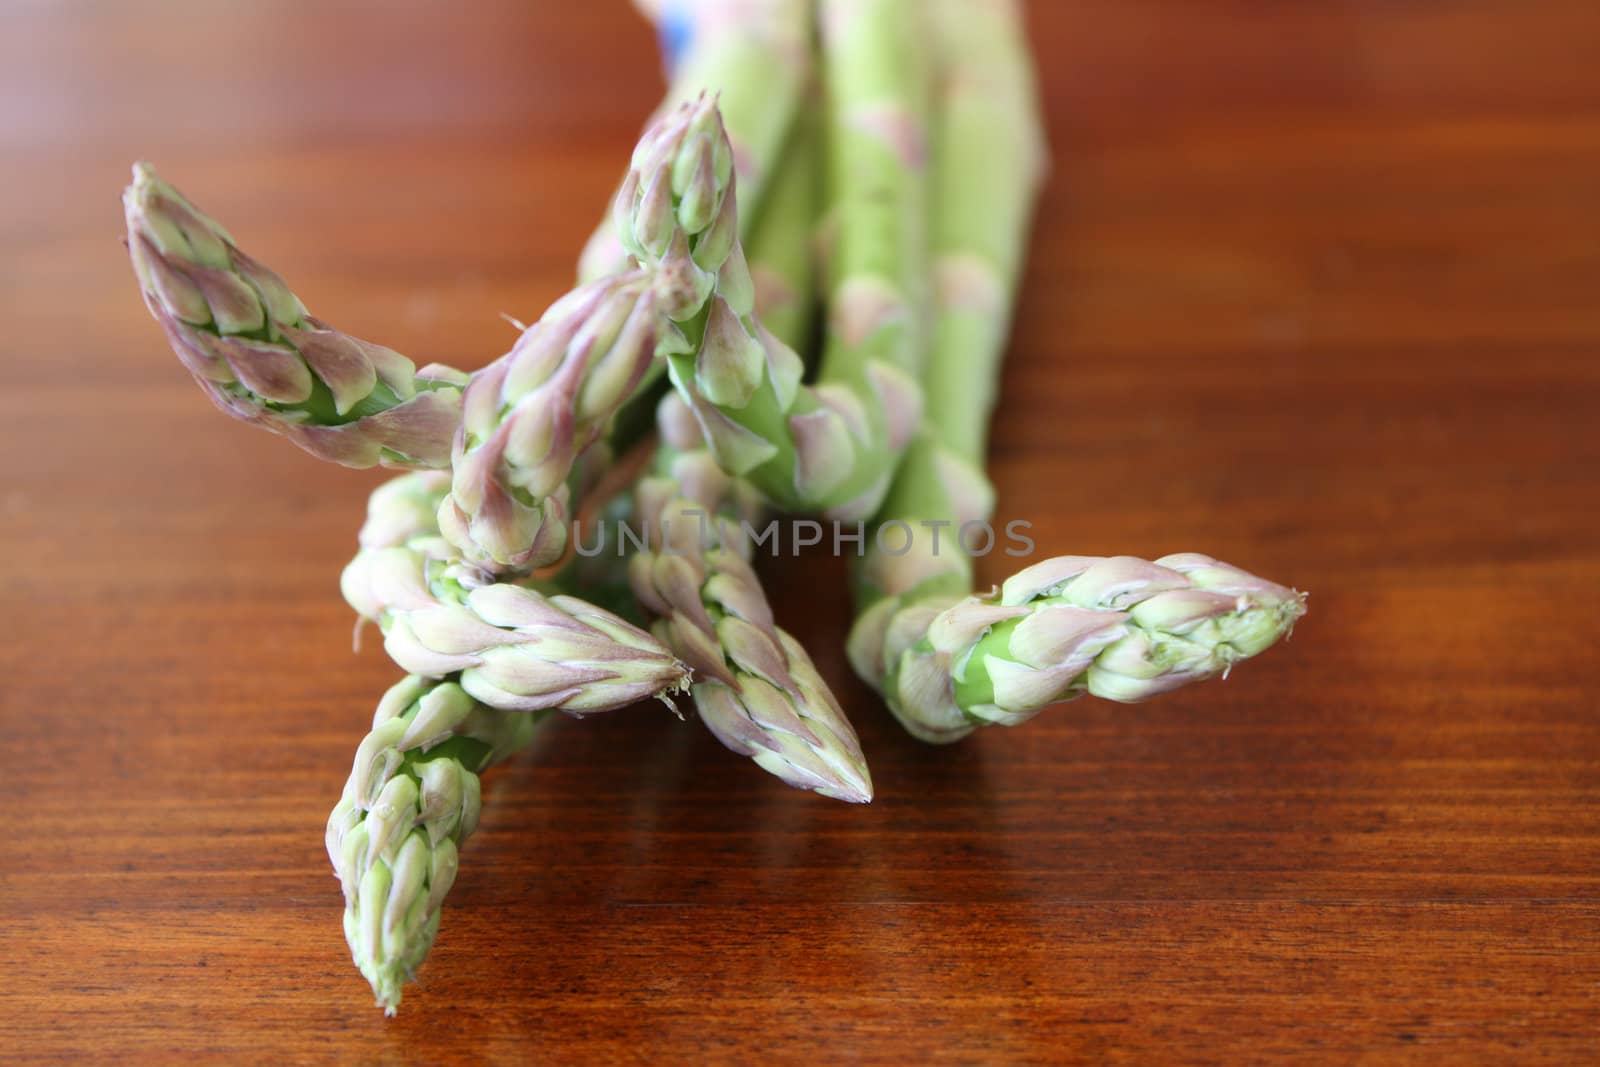 Bundle of asparagus on a wodden surface